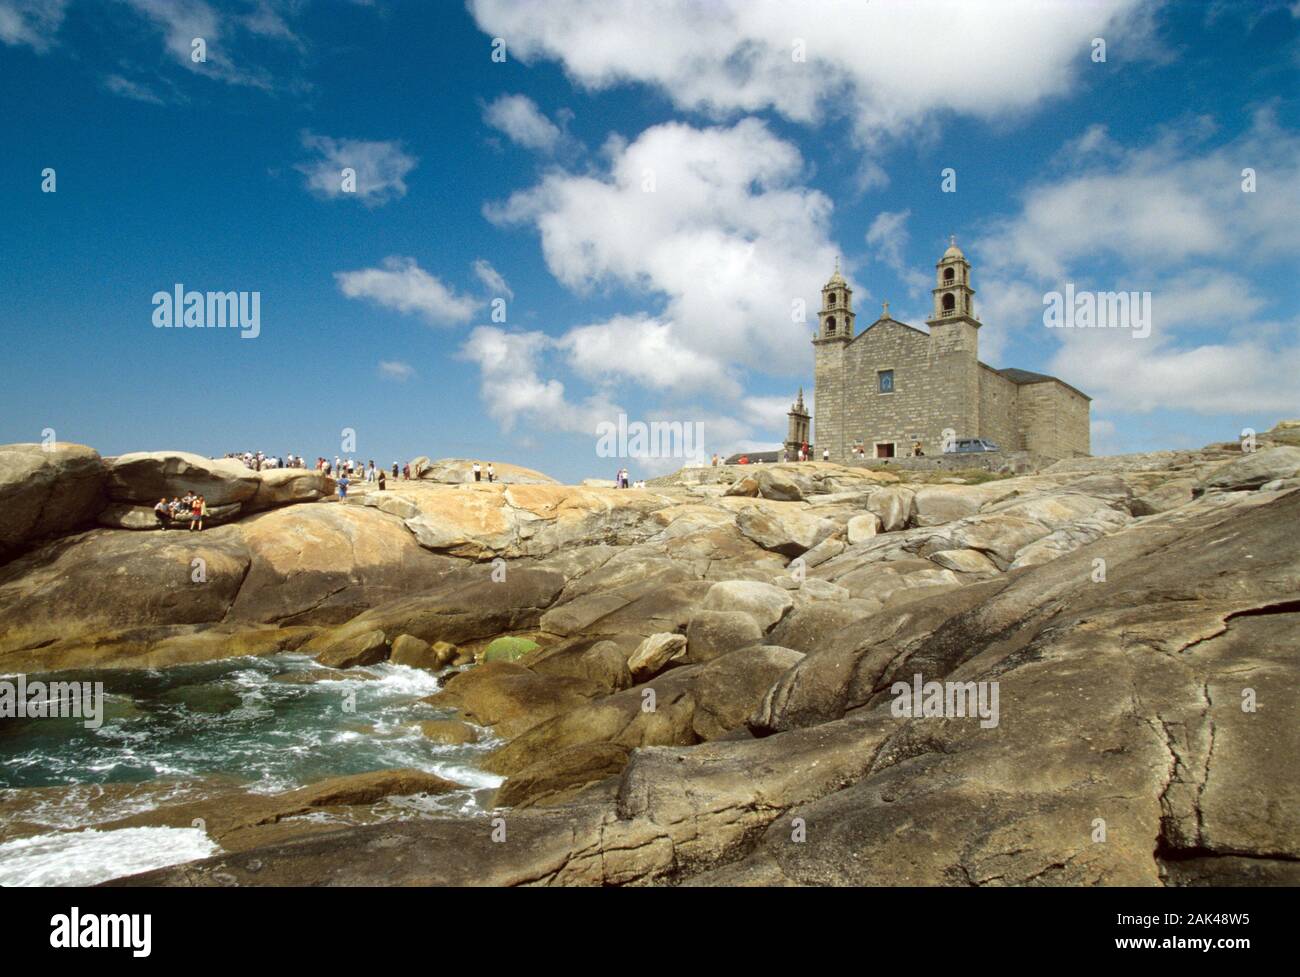 Northern Spain: The Church of Nuestra Senora de la Barca near Muxía | usage worldwide Stock Photo